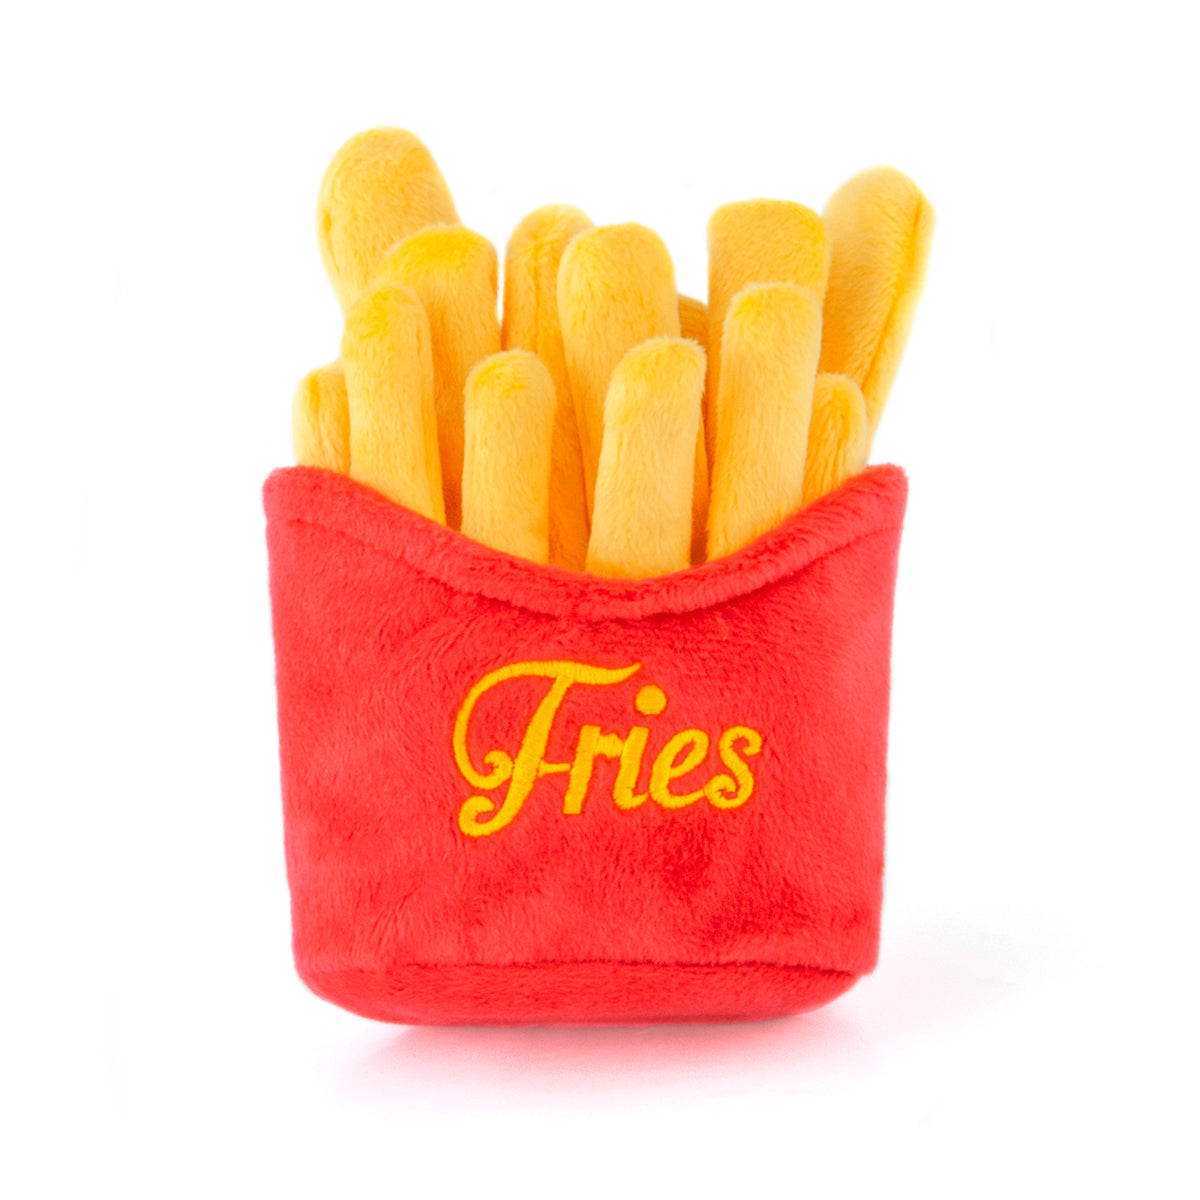 fries-dog-toy